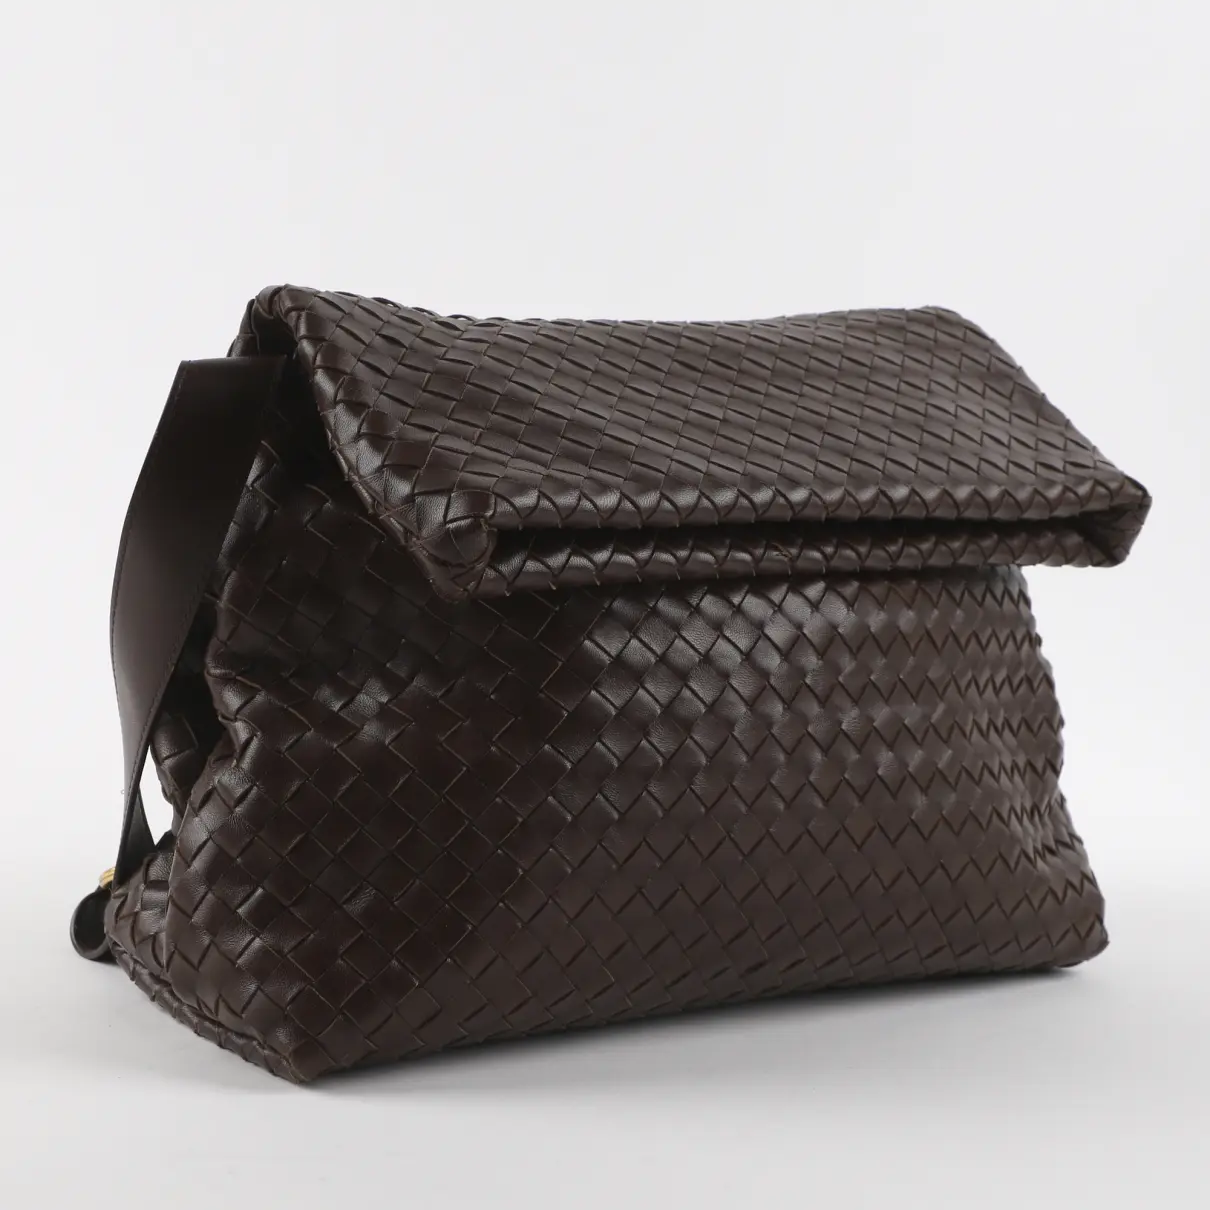 Buy Bottega Veneta Leather handbag online